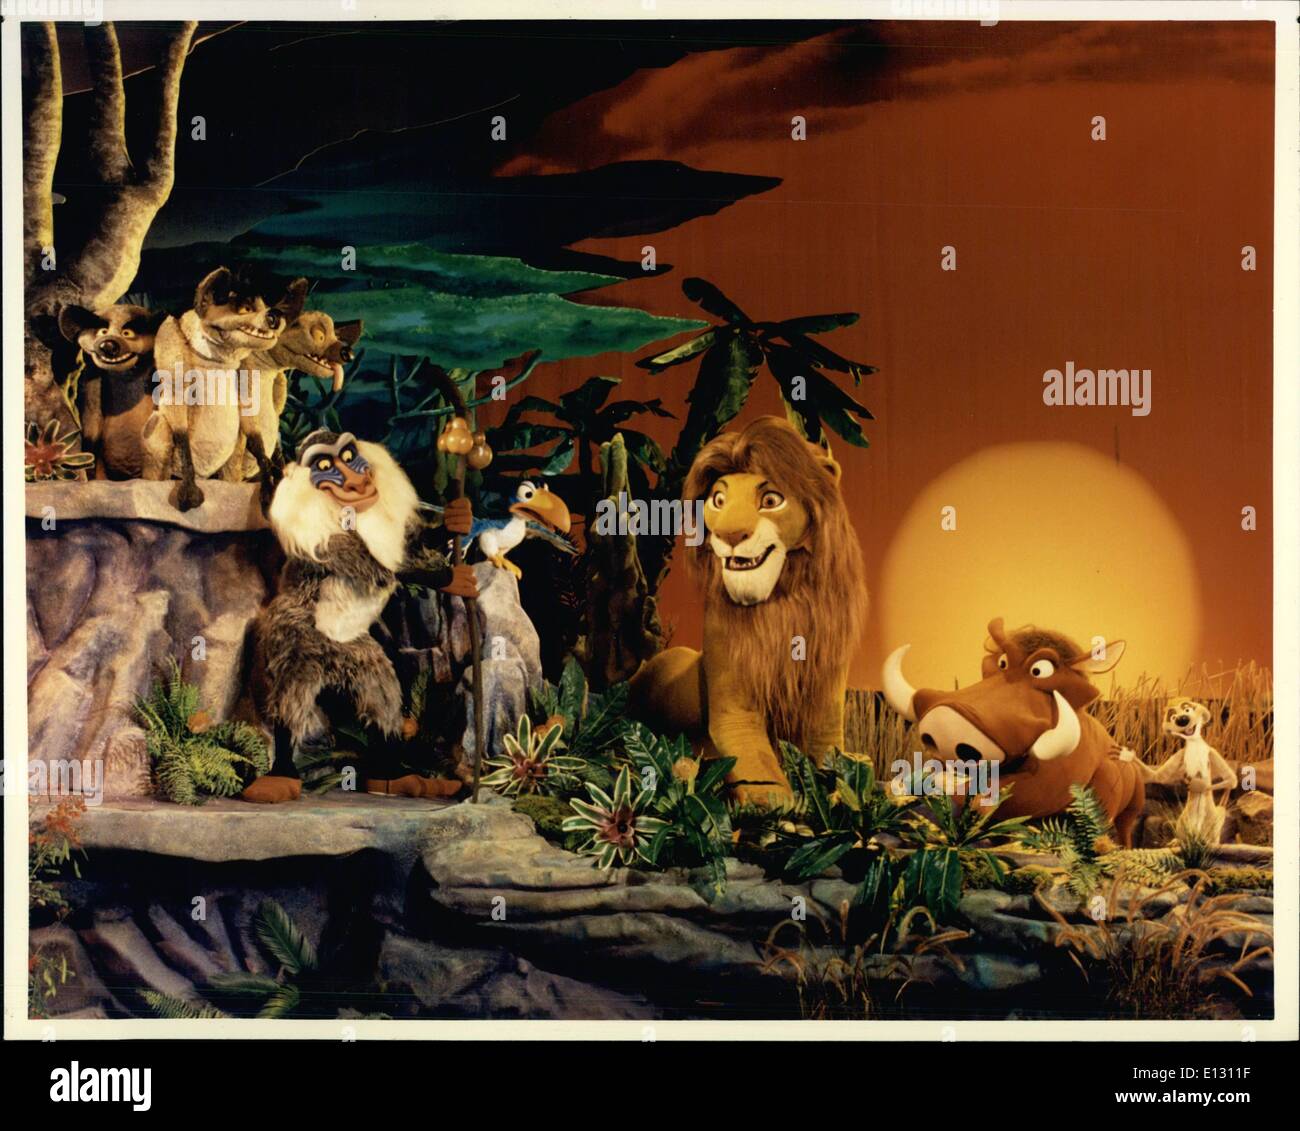 Lion king disney rafiki hi-res stock photography and images - Alamy